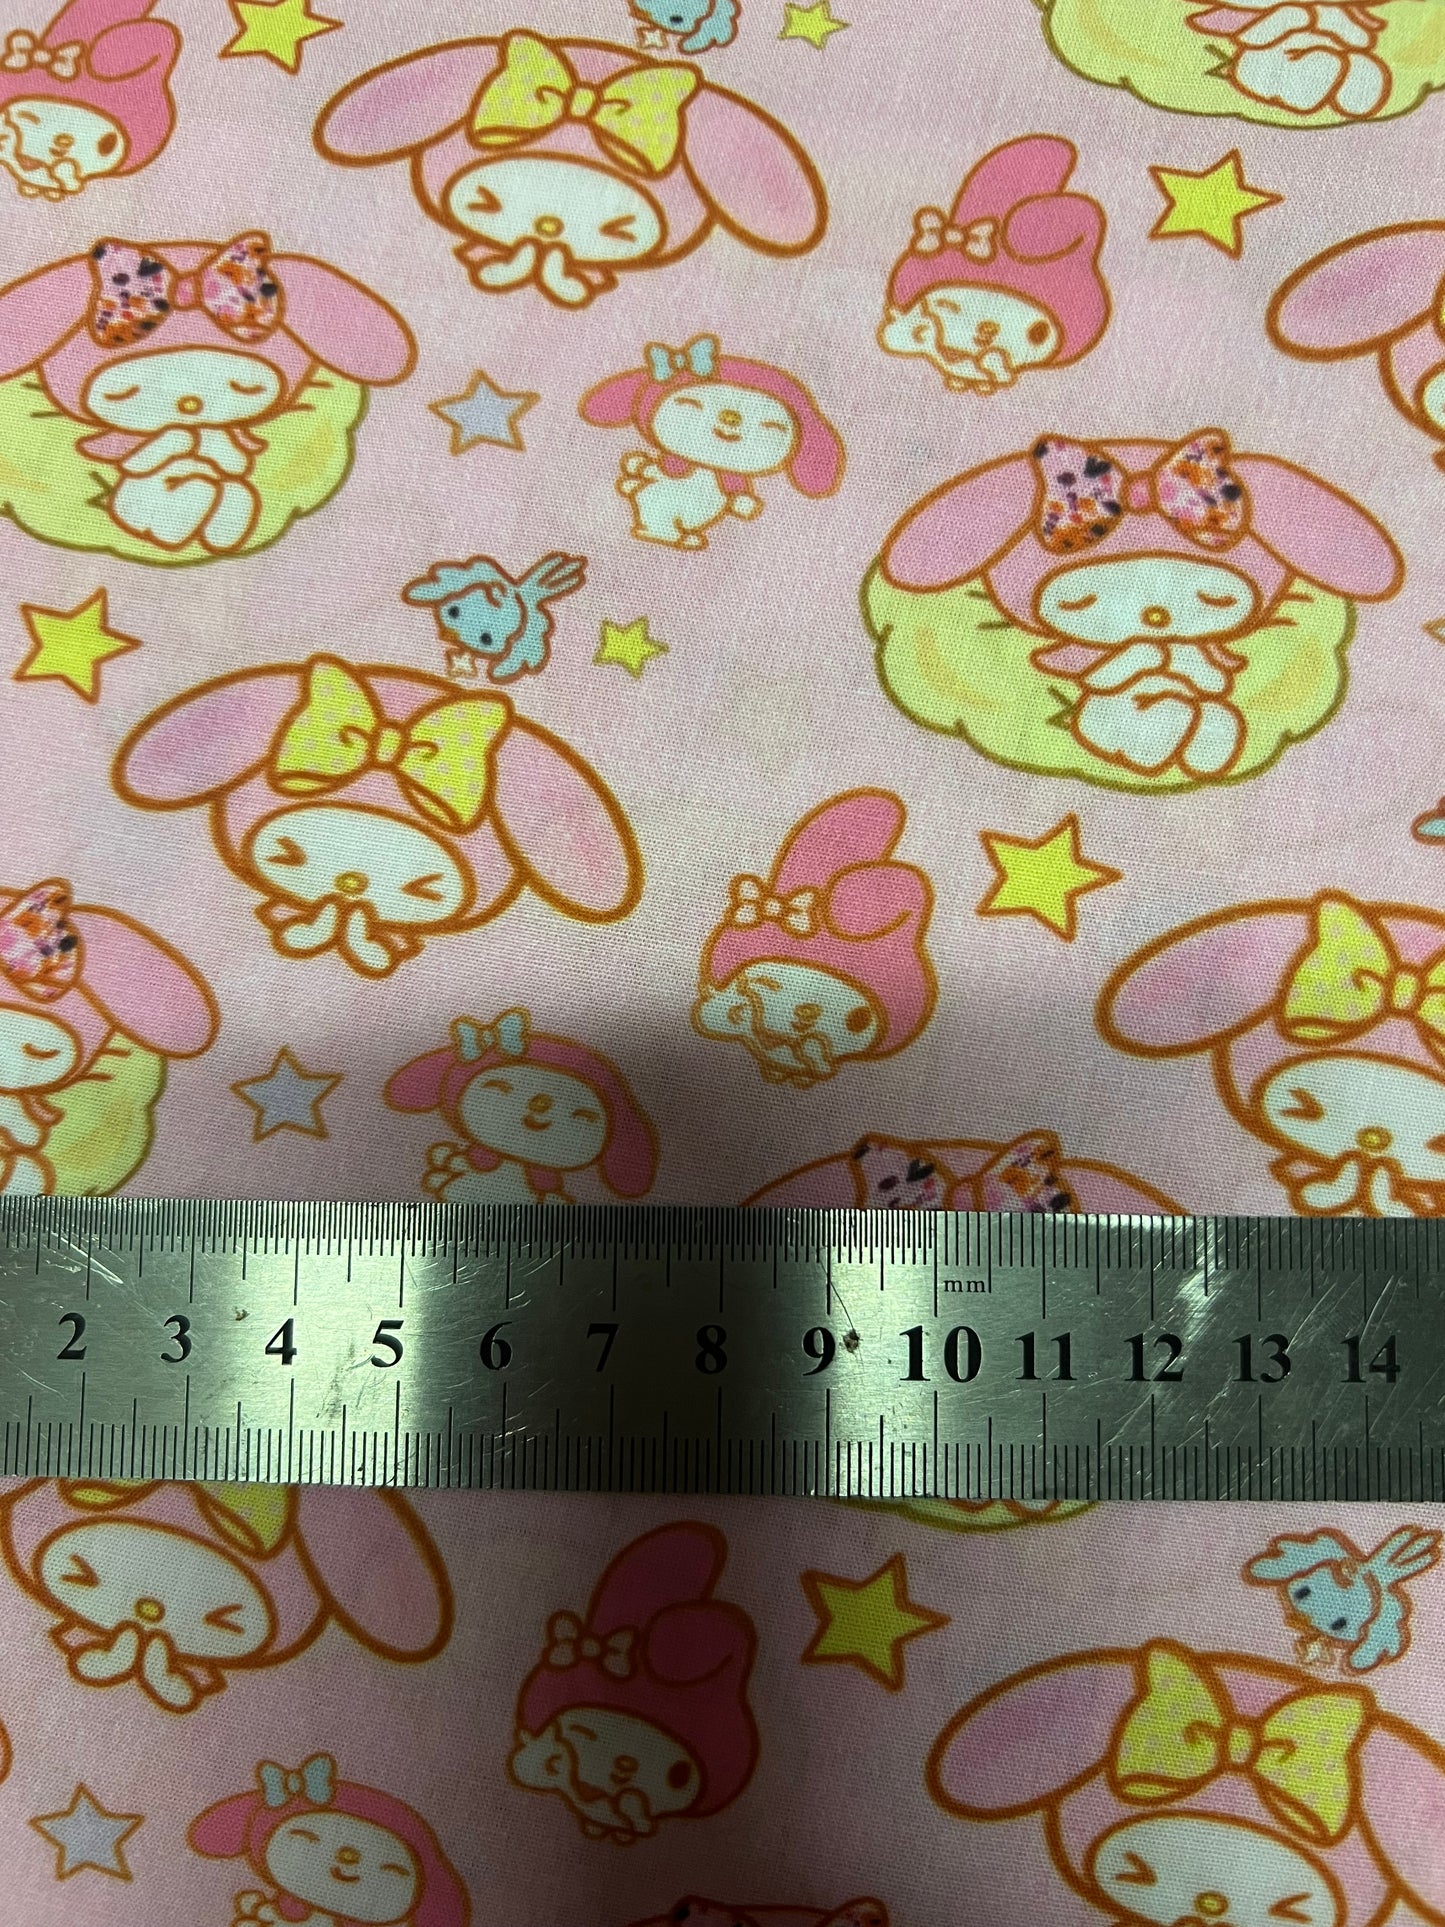 SLEEPY MY MELODY - Polycotton Fabric from Japan